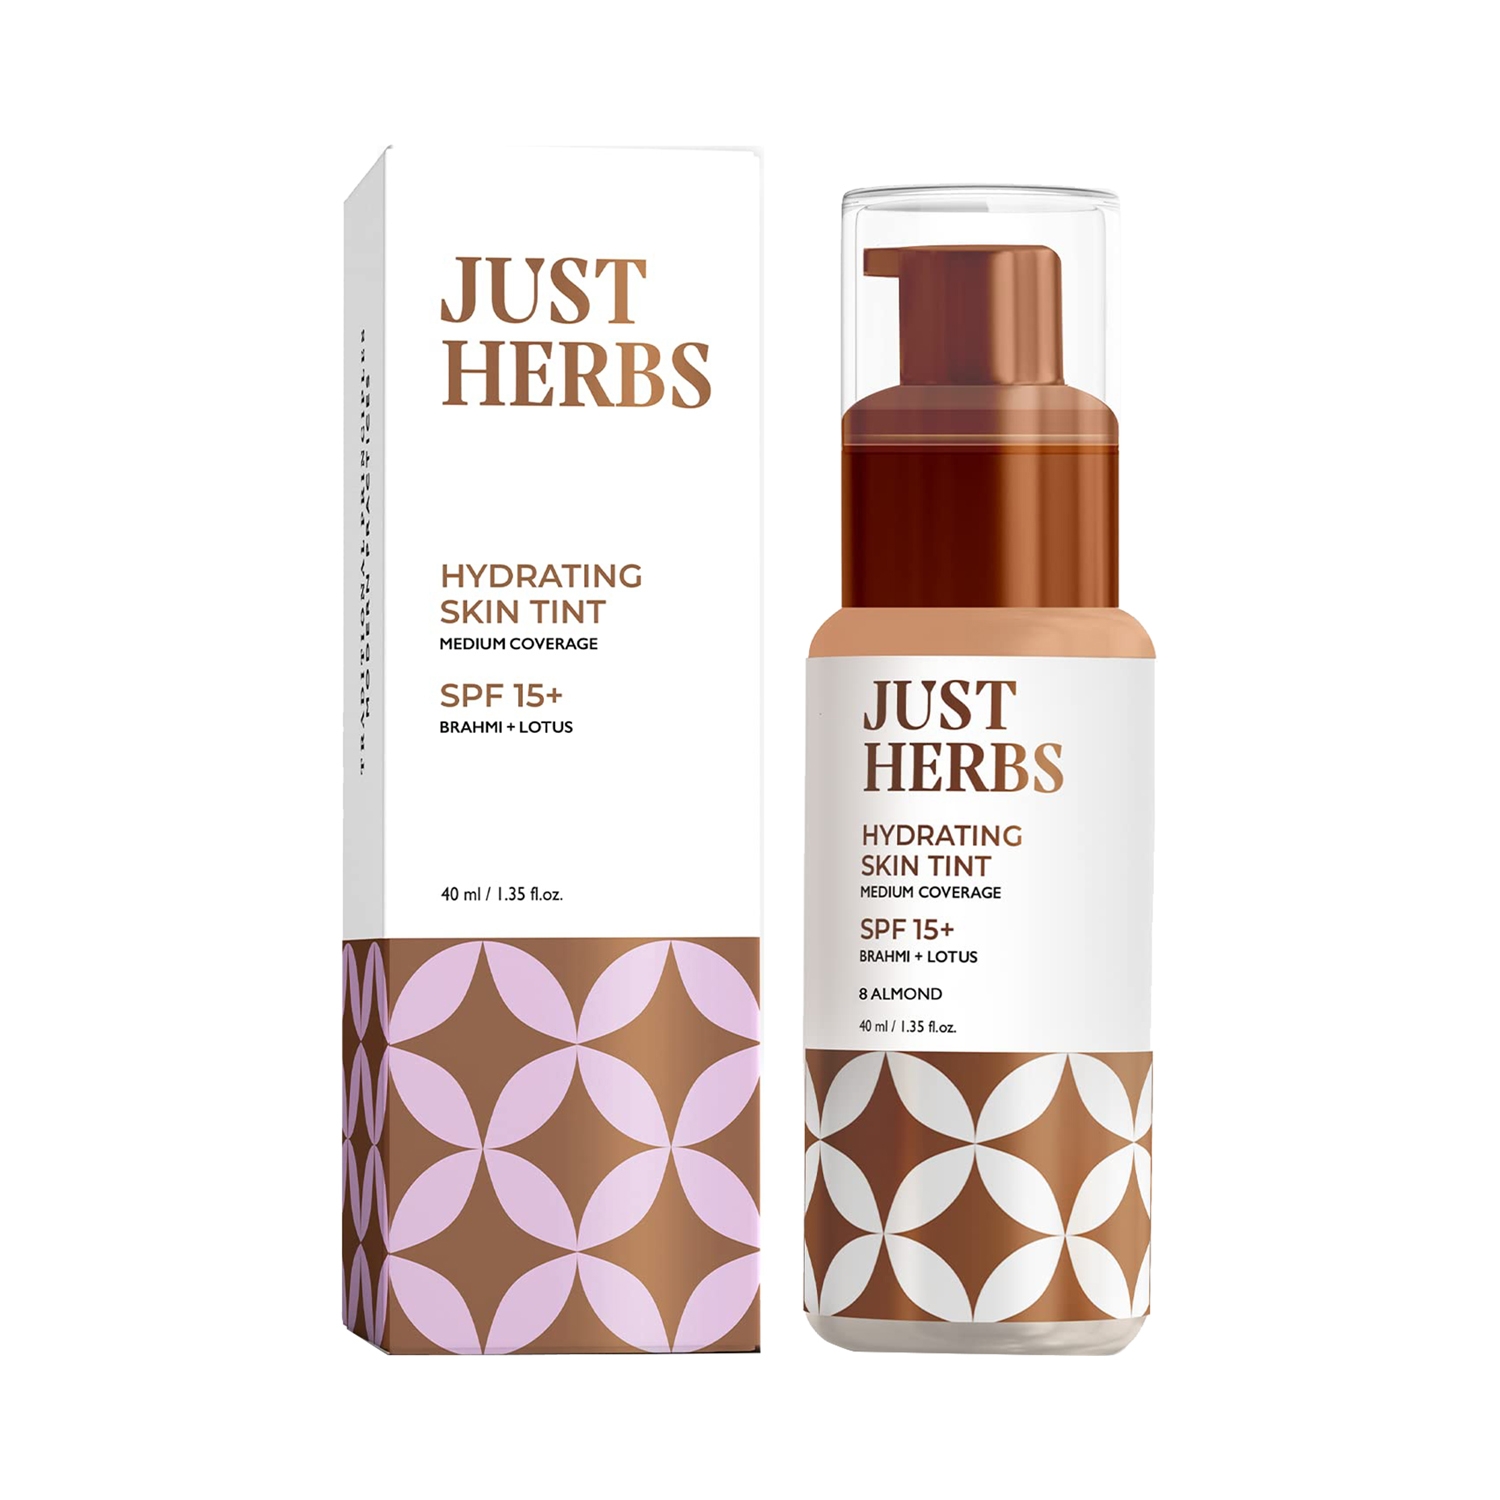 Just Herbs | Just Herbs Hydrating Skin Tint BB Cream Foundation - 8 Almond (40ml)